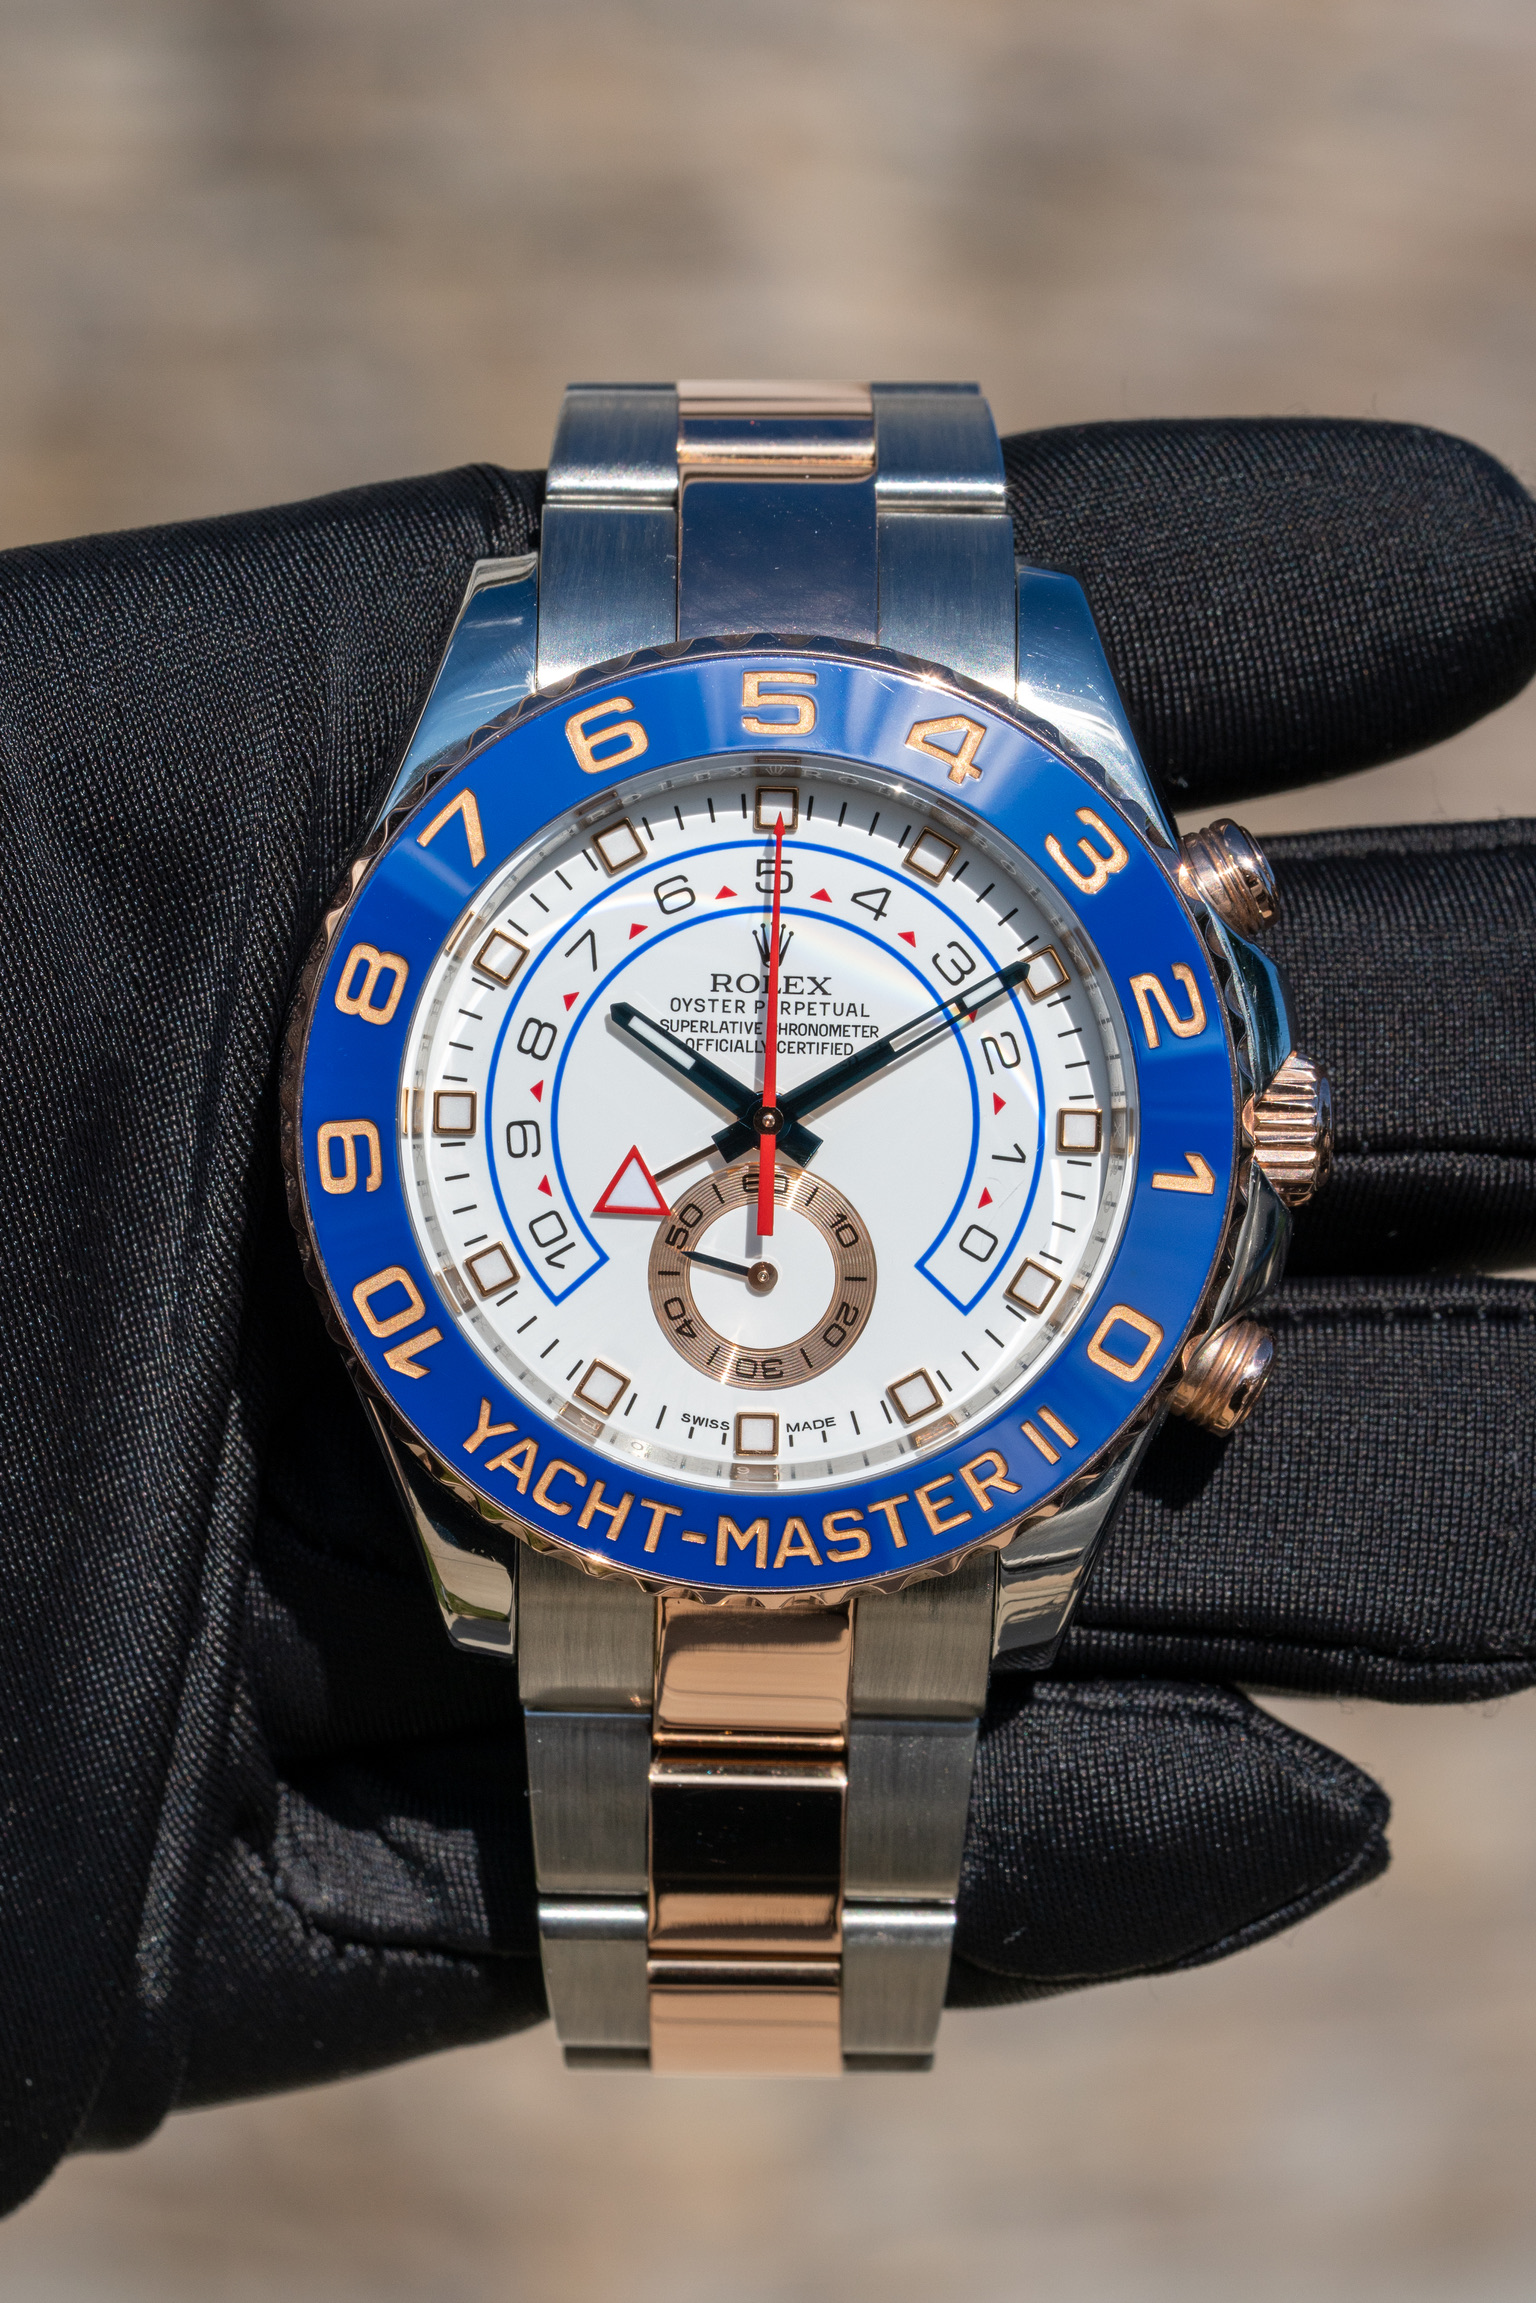 the Rolex Yachtmaster II wristwatch